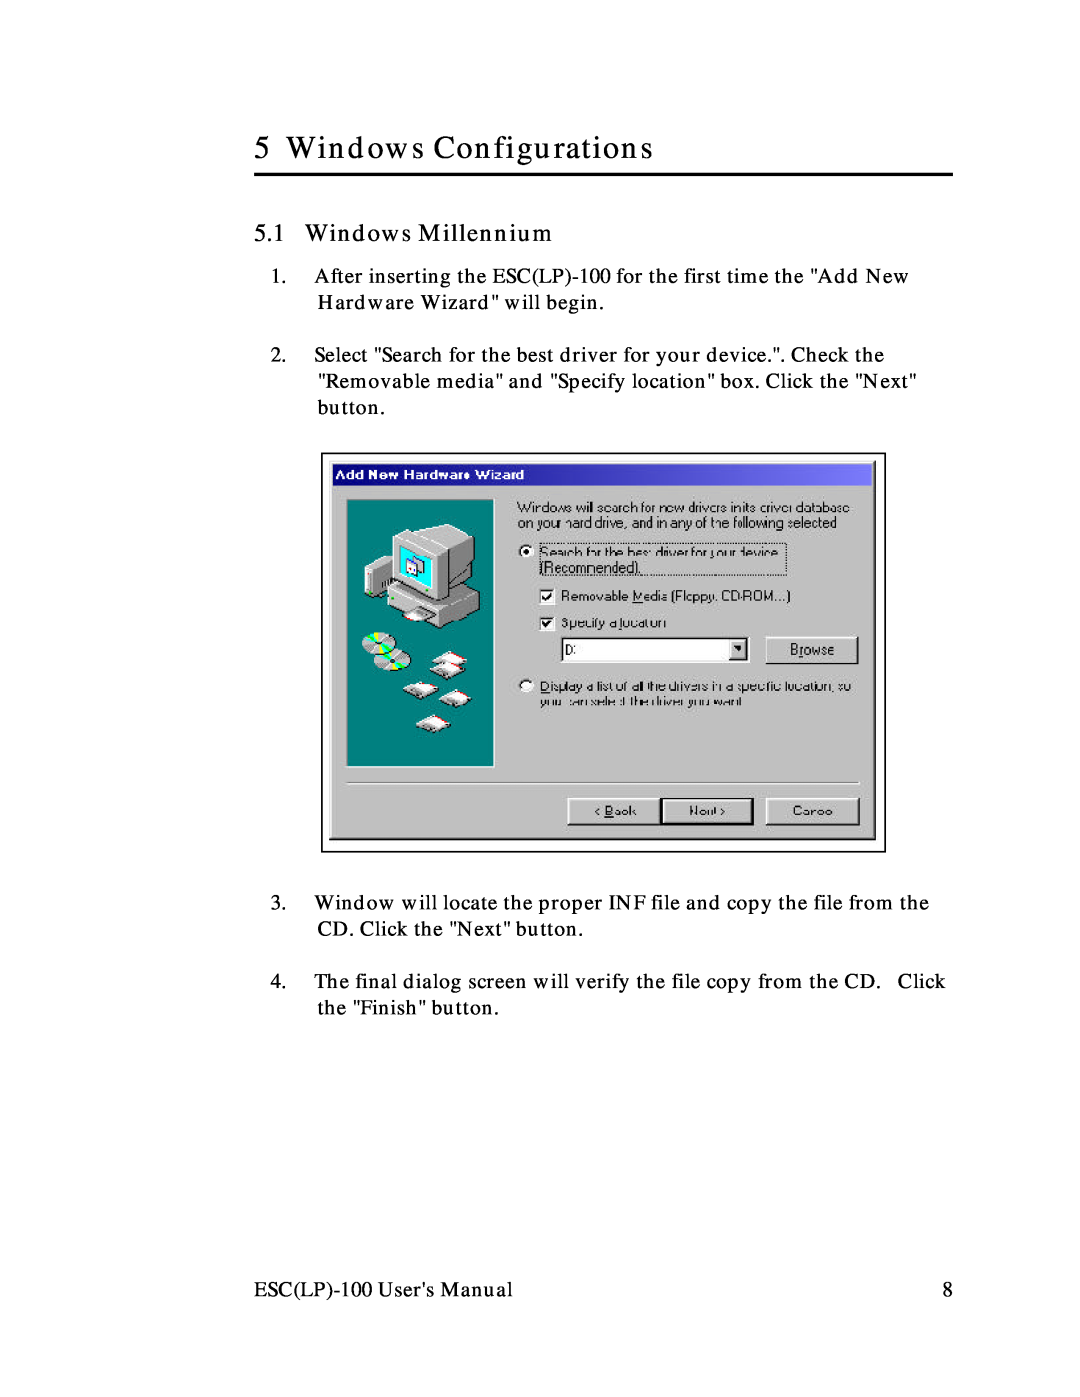 Quatech RS-232 user manual Windows Configurations, Windows Millennium 